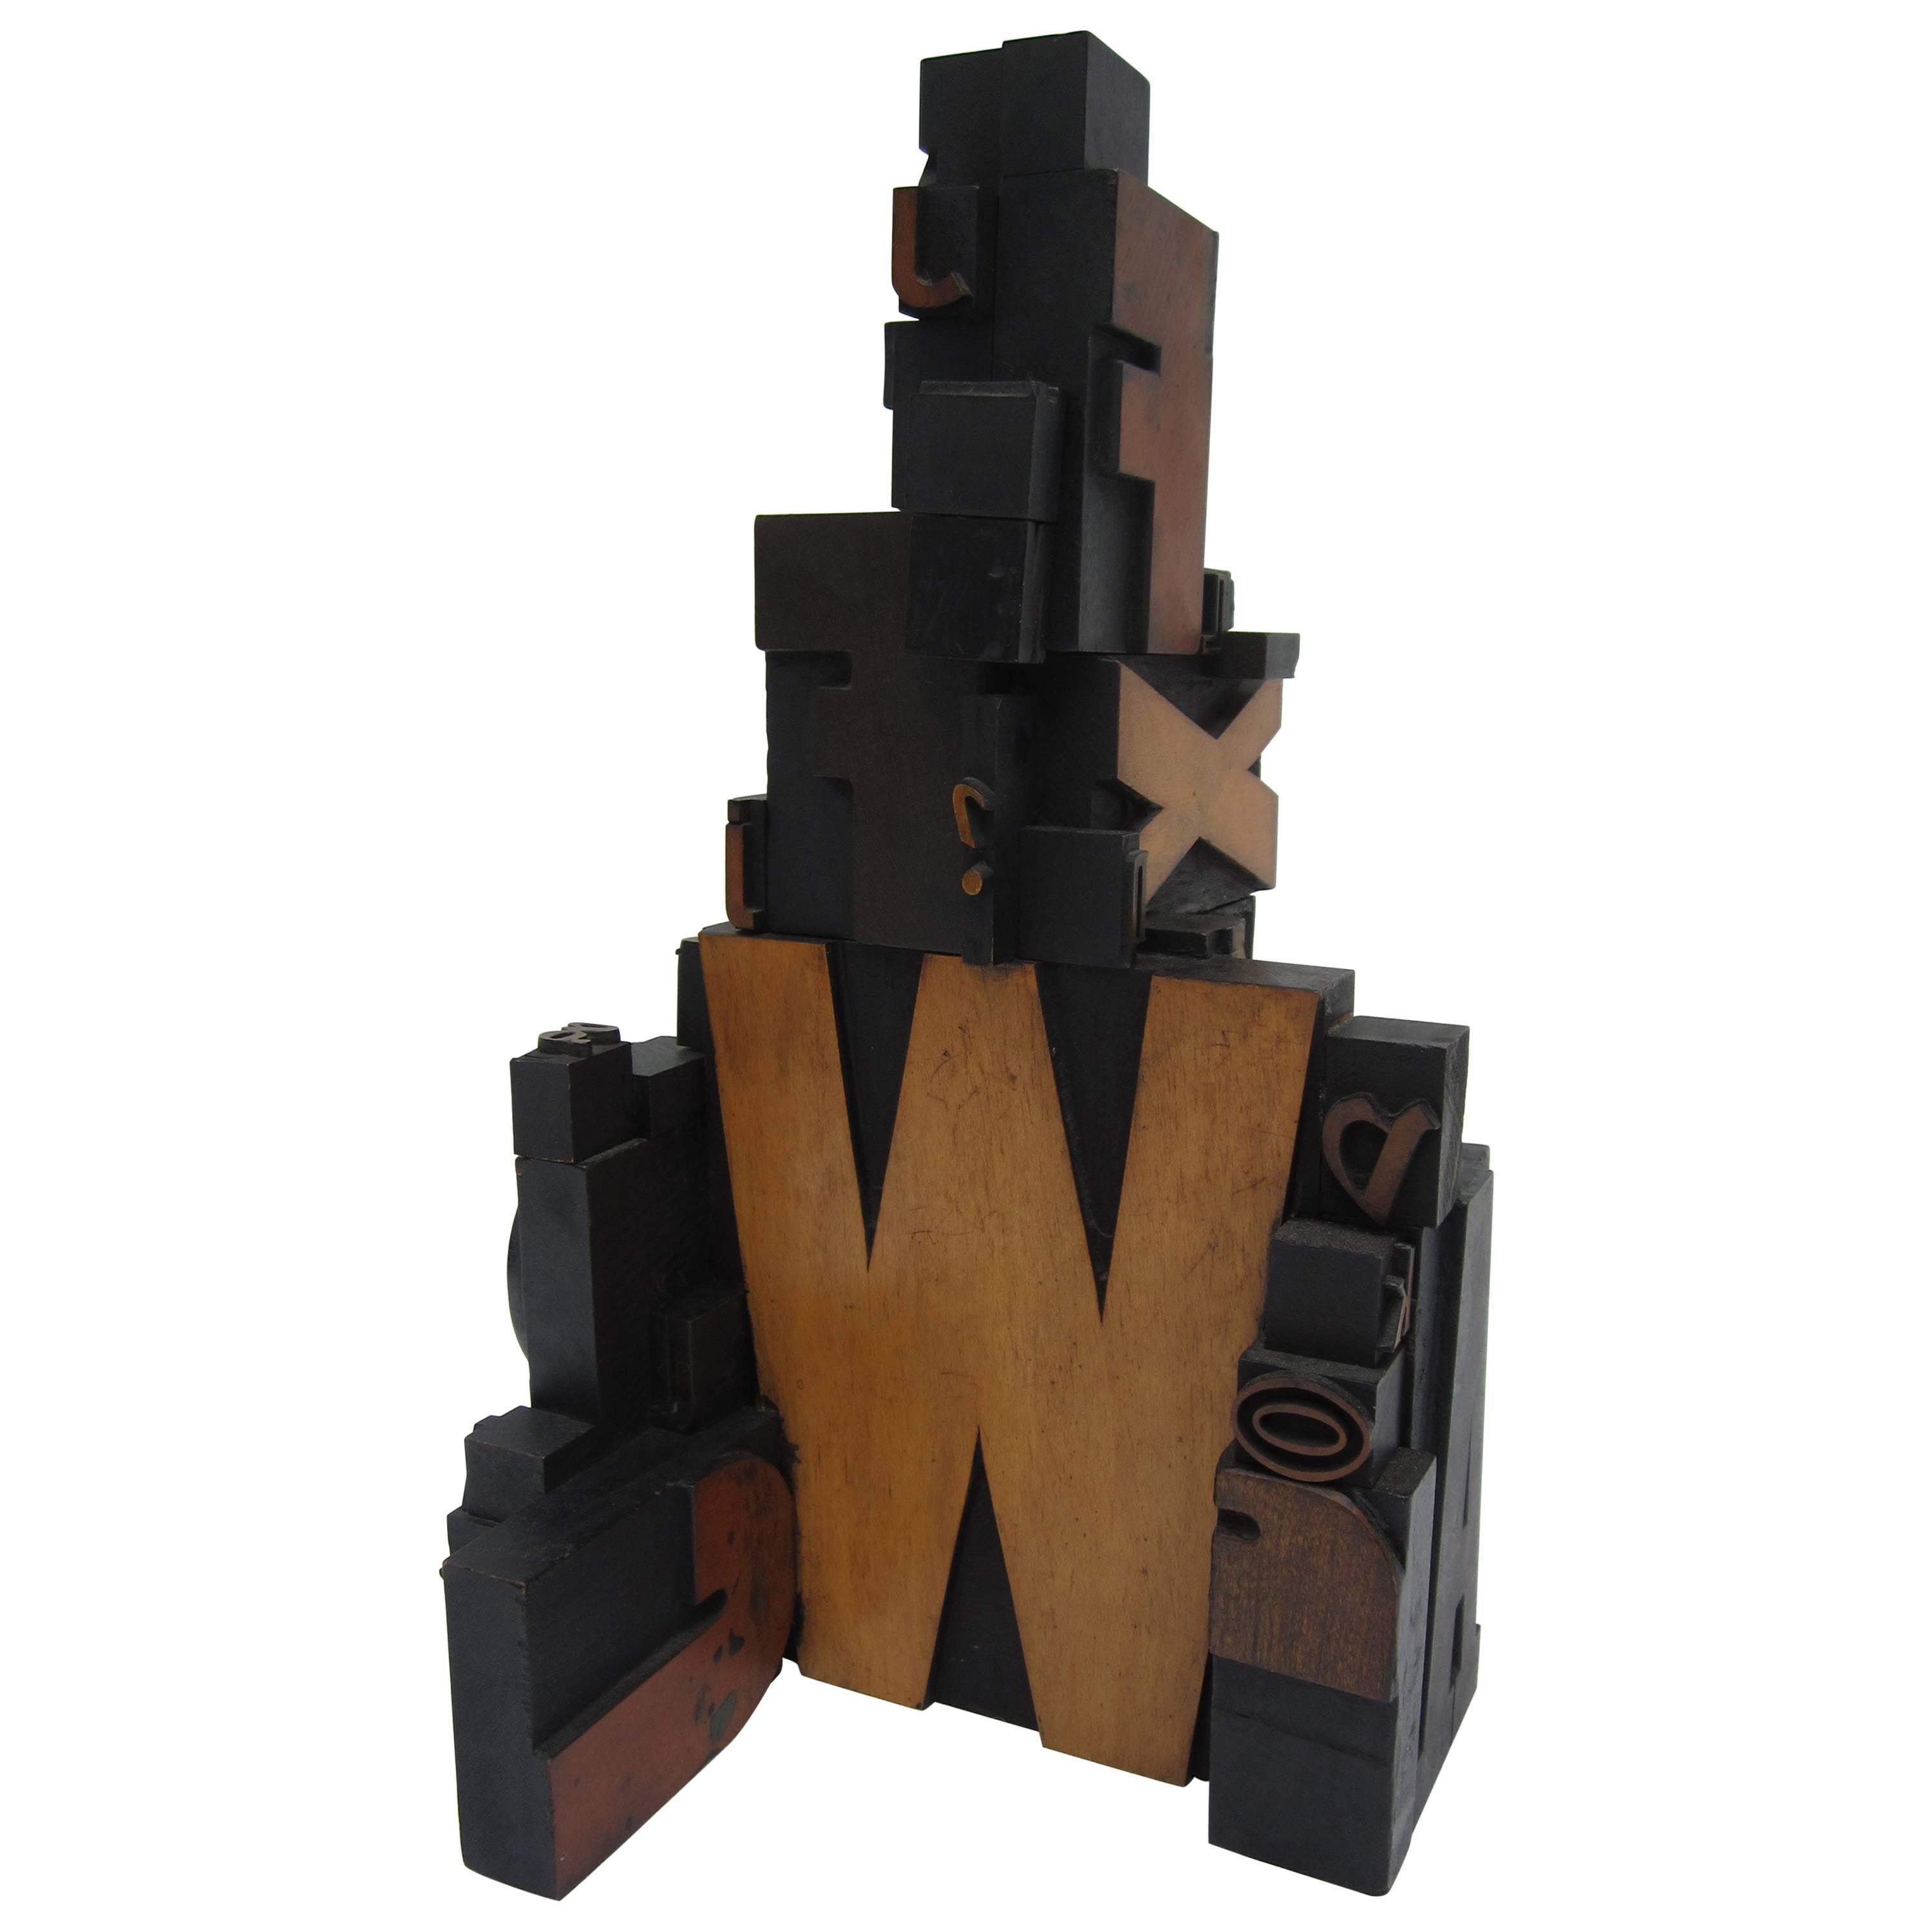 Letterpress Wood Block Sculpture For Sale